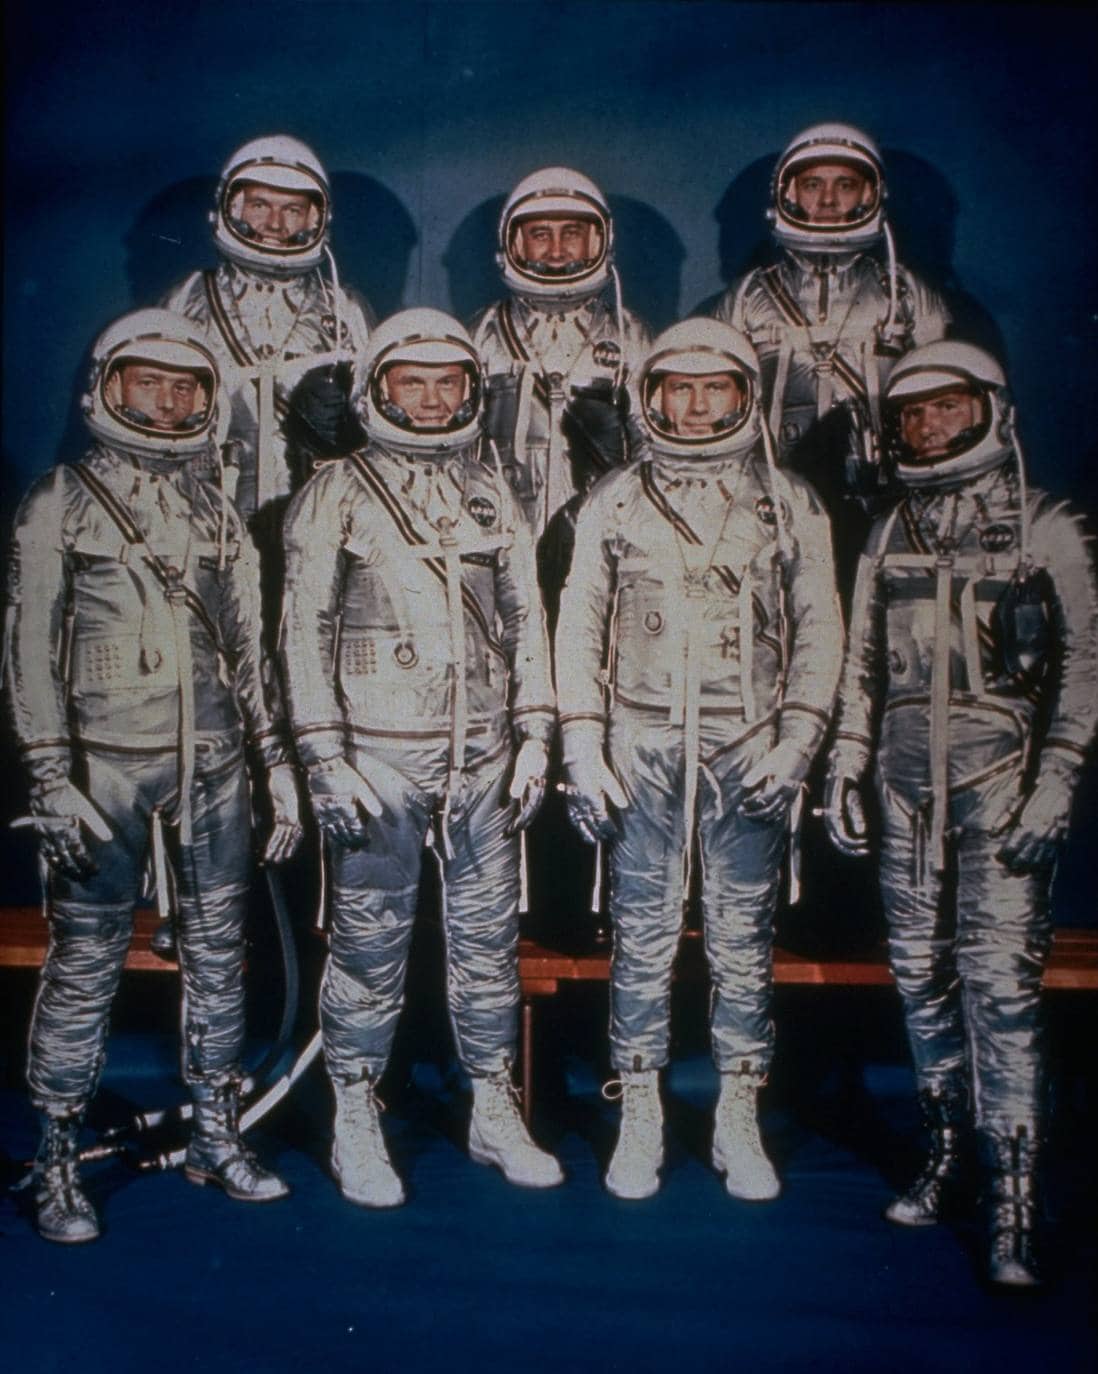 Tripulación de la nave espacial 'Mercury' de la NASA (1961): Walter Schirra Jr. , Donald Slayton, John Glenn, Scott Carpenter, Alan Shepard, Jr. , Virgil Grissom y Gordon Cooper. 